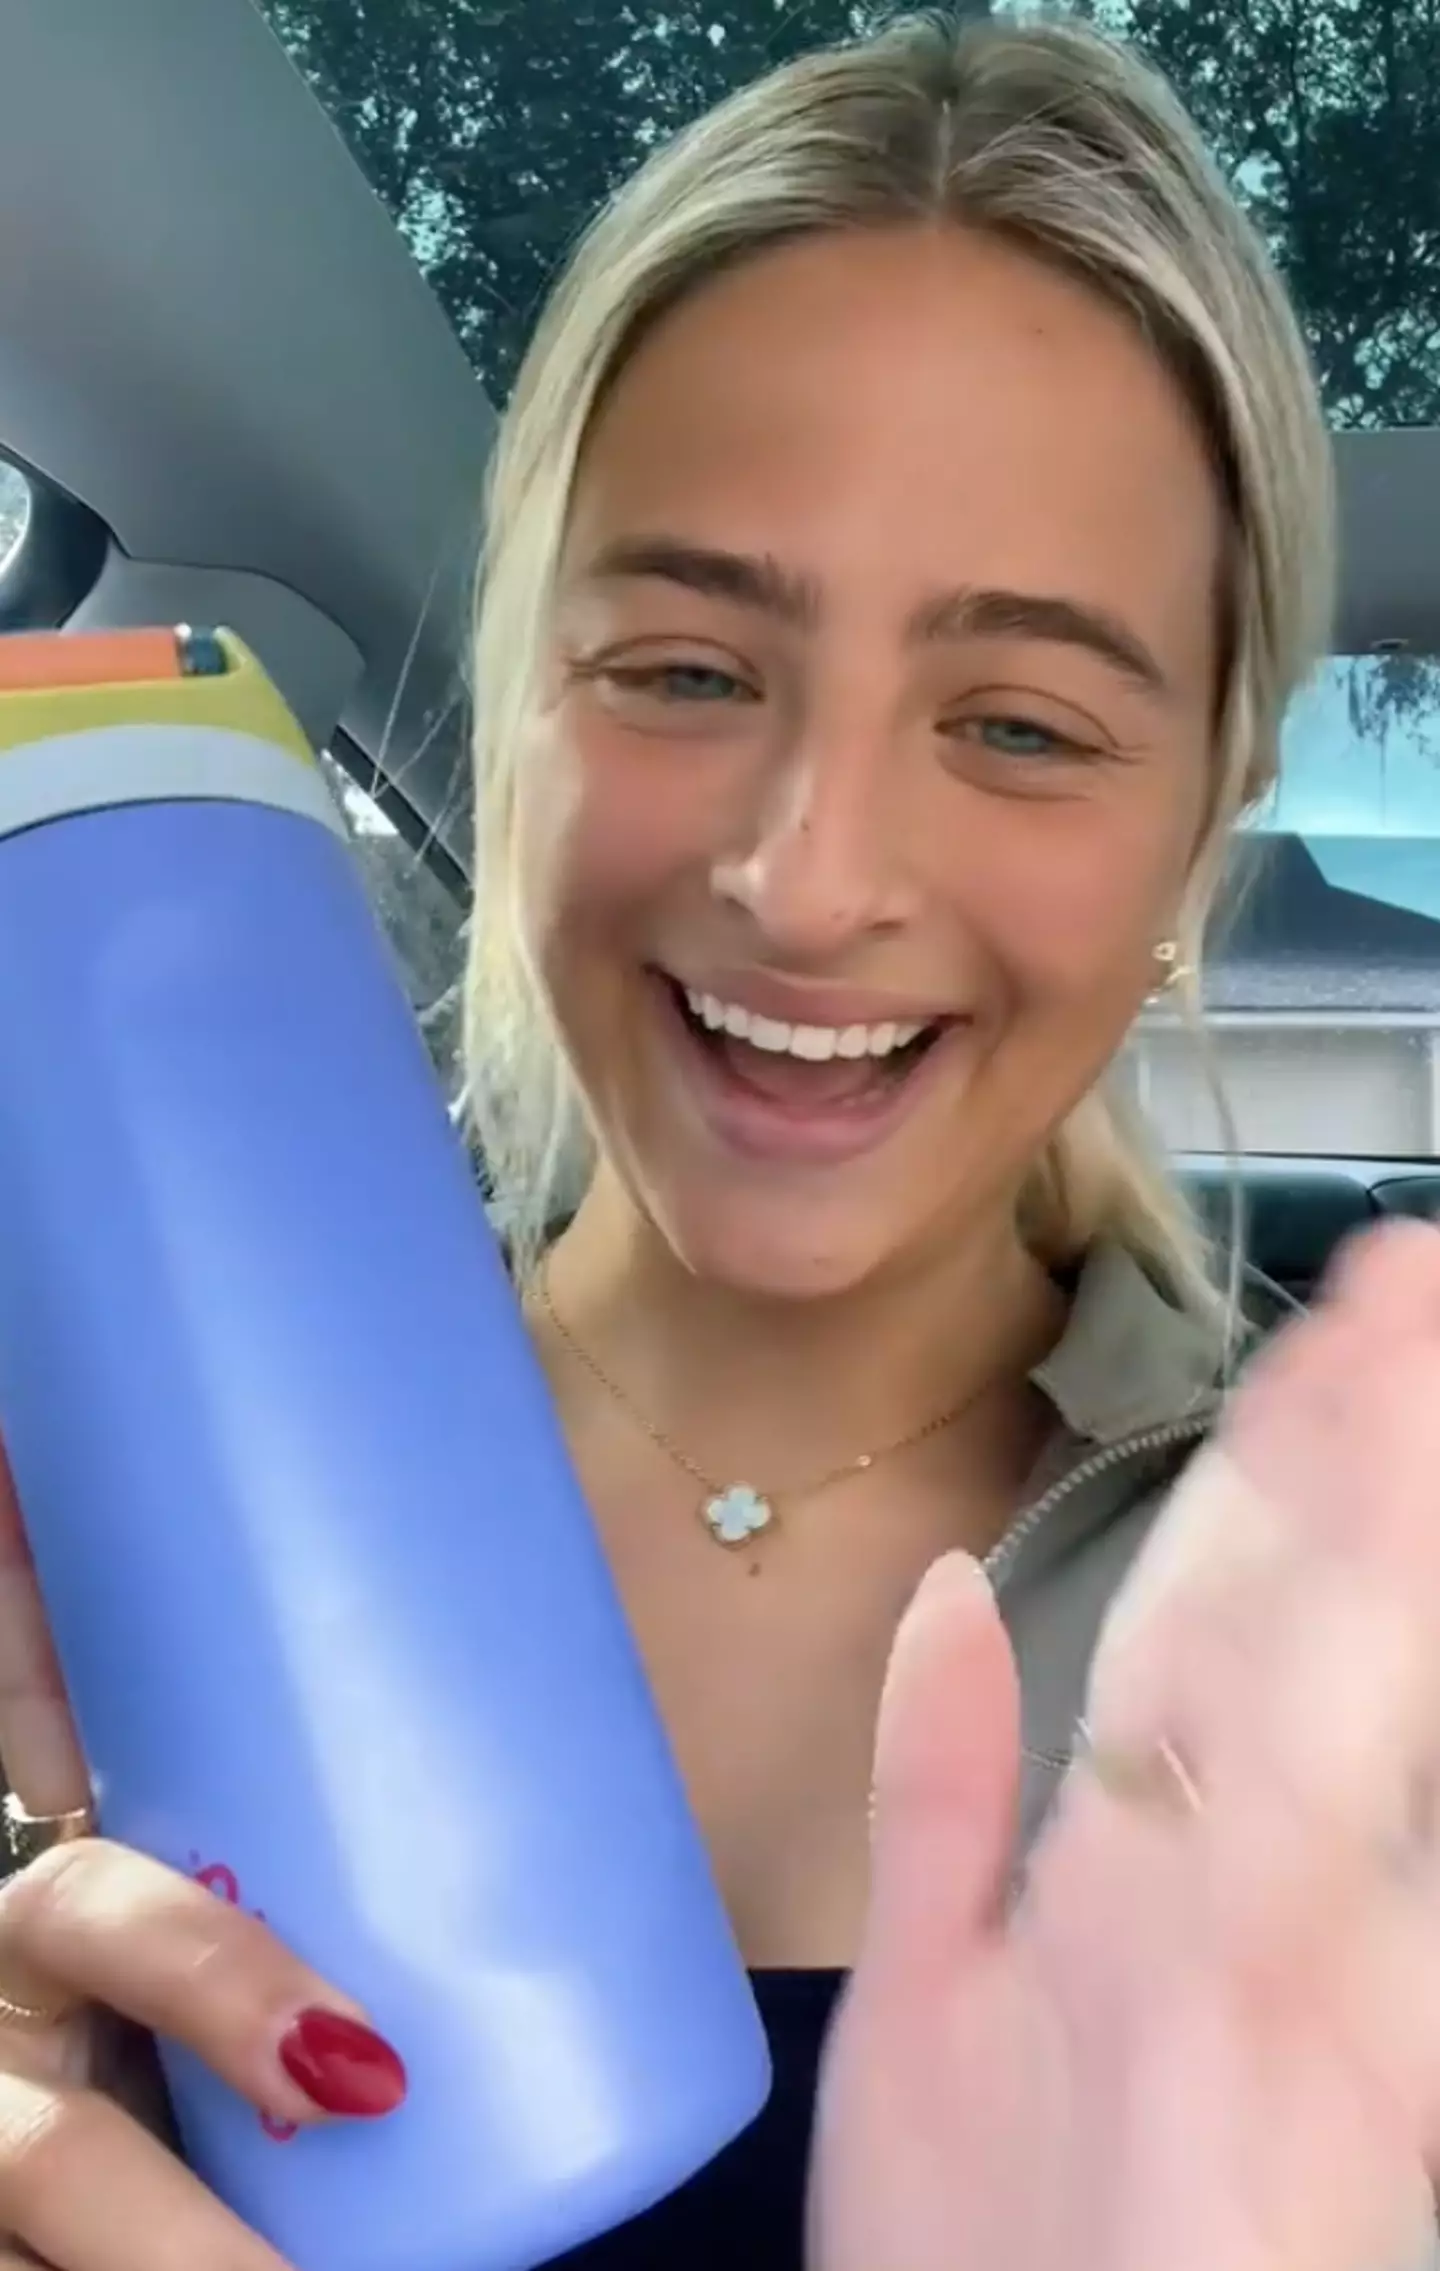 Avery opened up about her 'rancid' water bottle habit. (TikTok/@notaverykatherine)